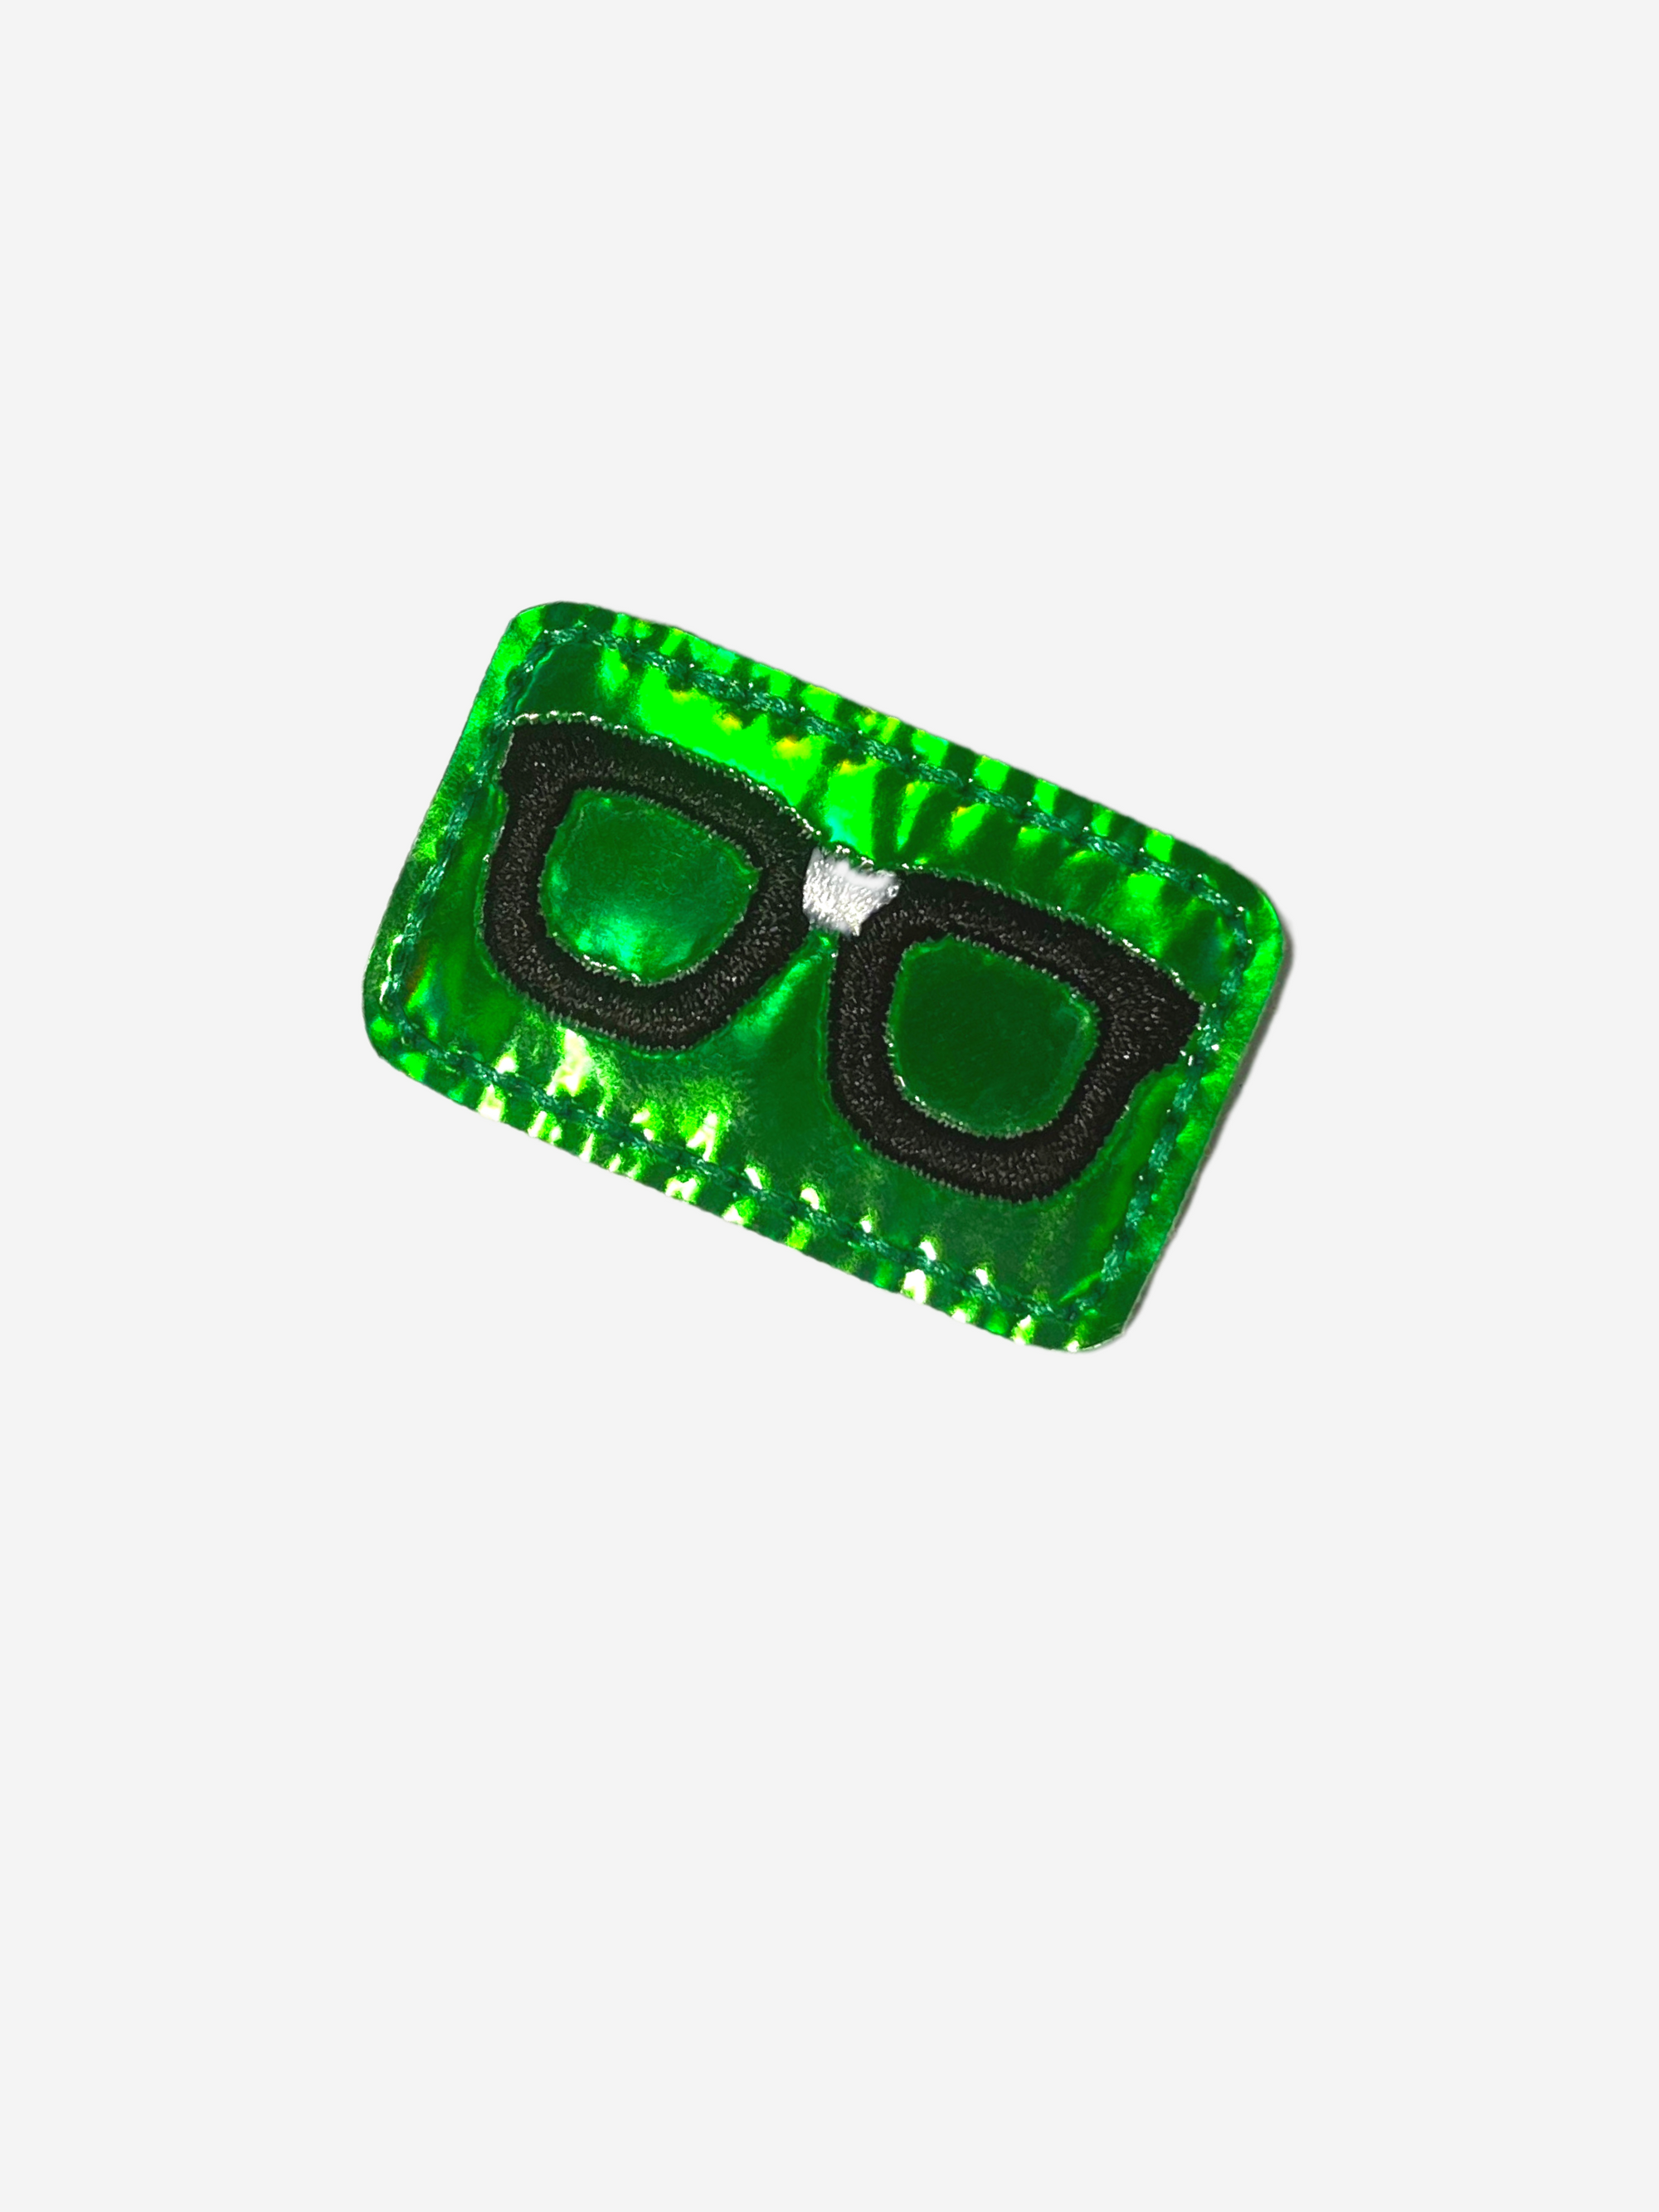 Green Eyeglasses Badge Reel Accessory